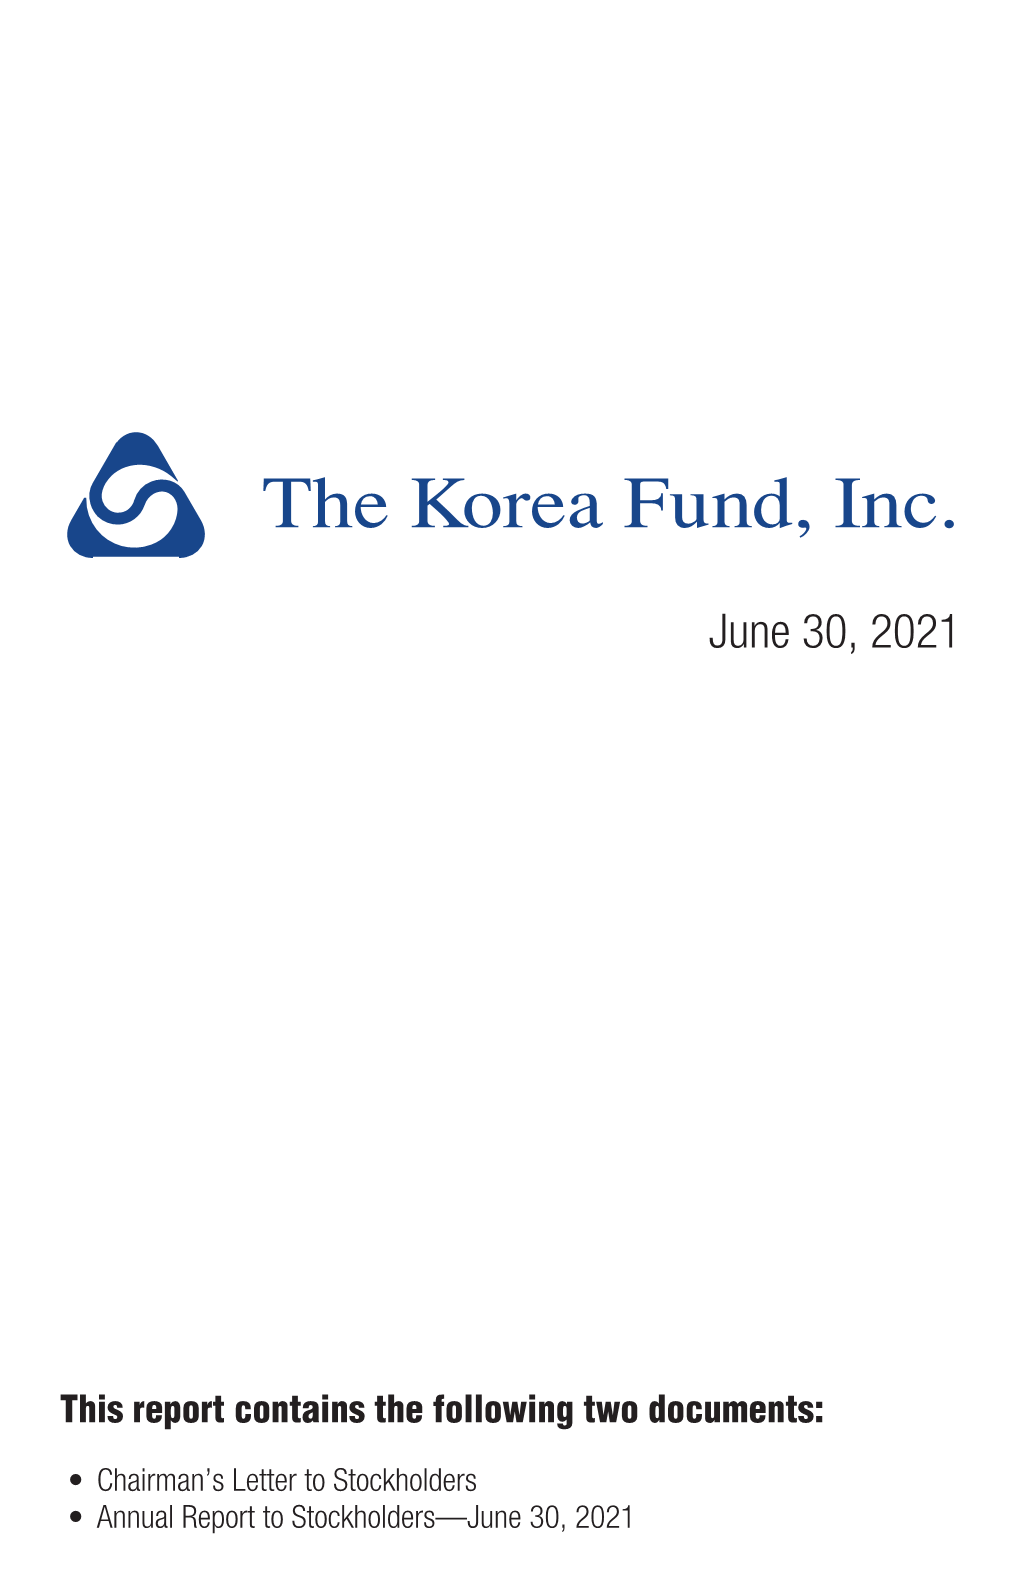 The Korea Fund, Inc. Annual Report 1 the Korea Fund, Inc